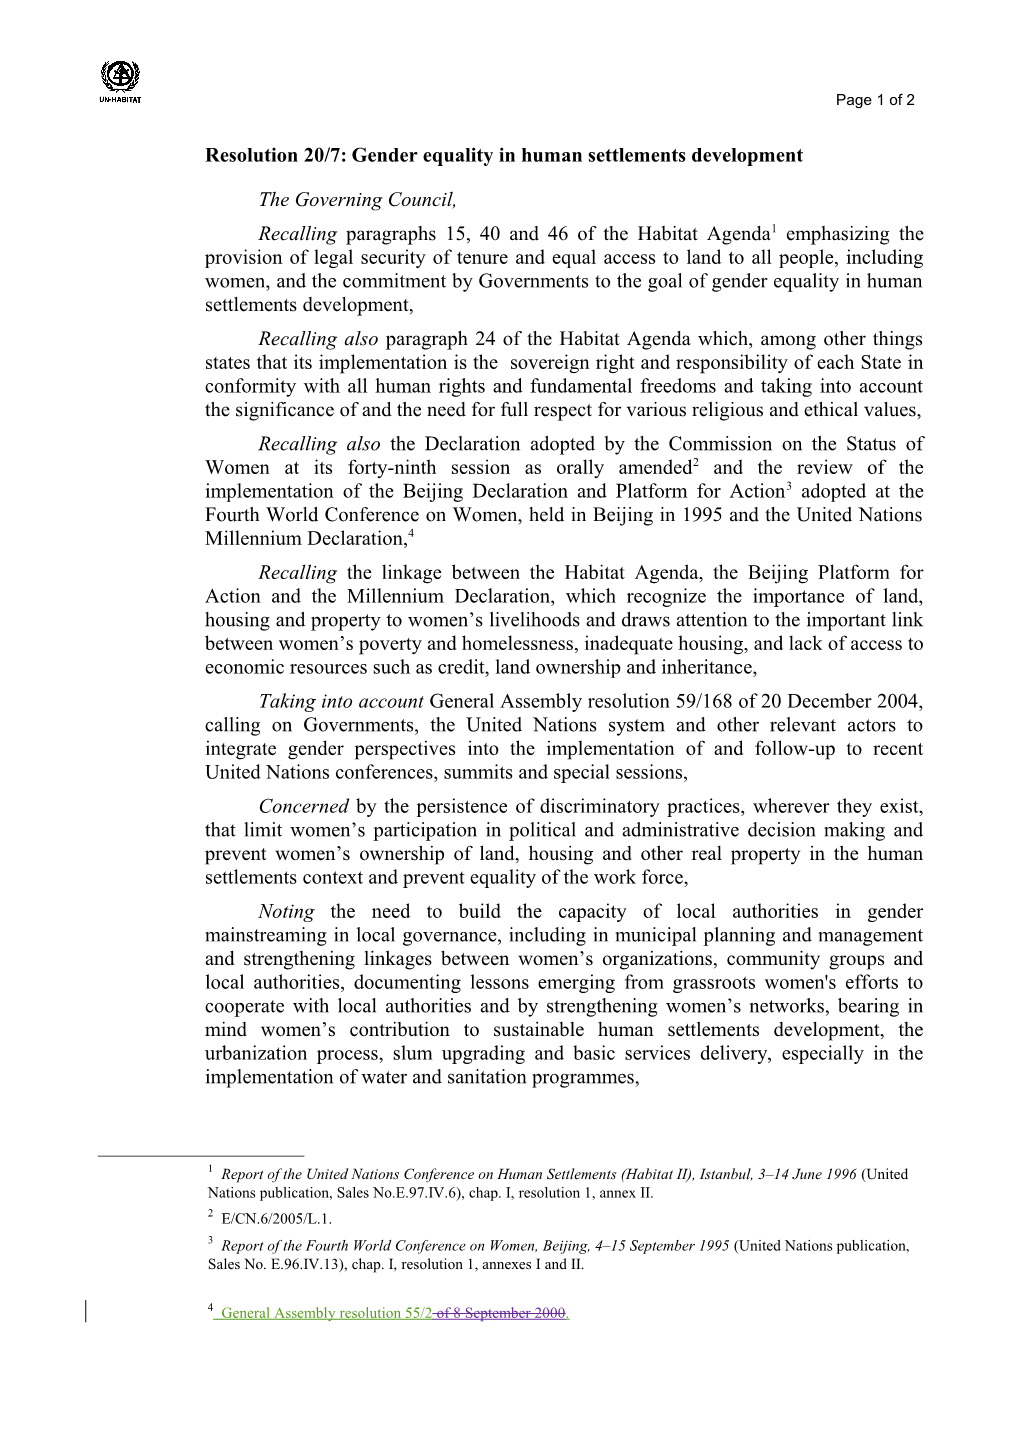 Resolution 20/7: Gender Equality in Human Settlements Development